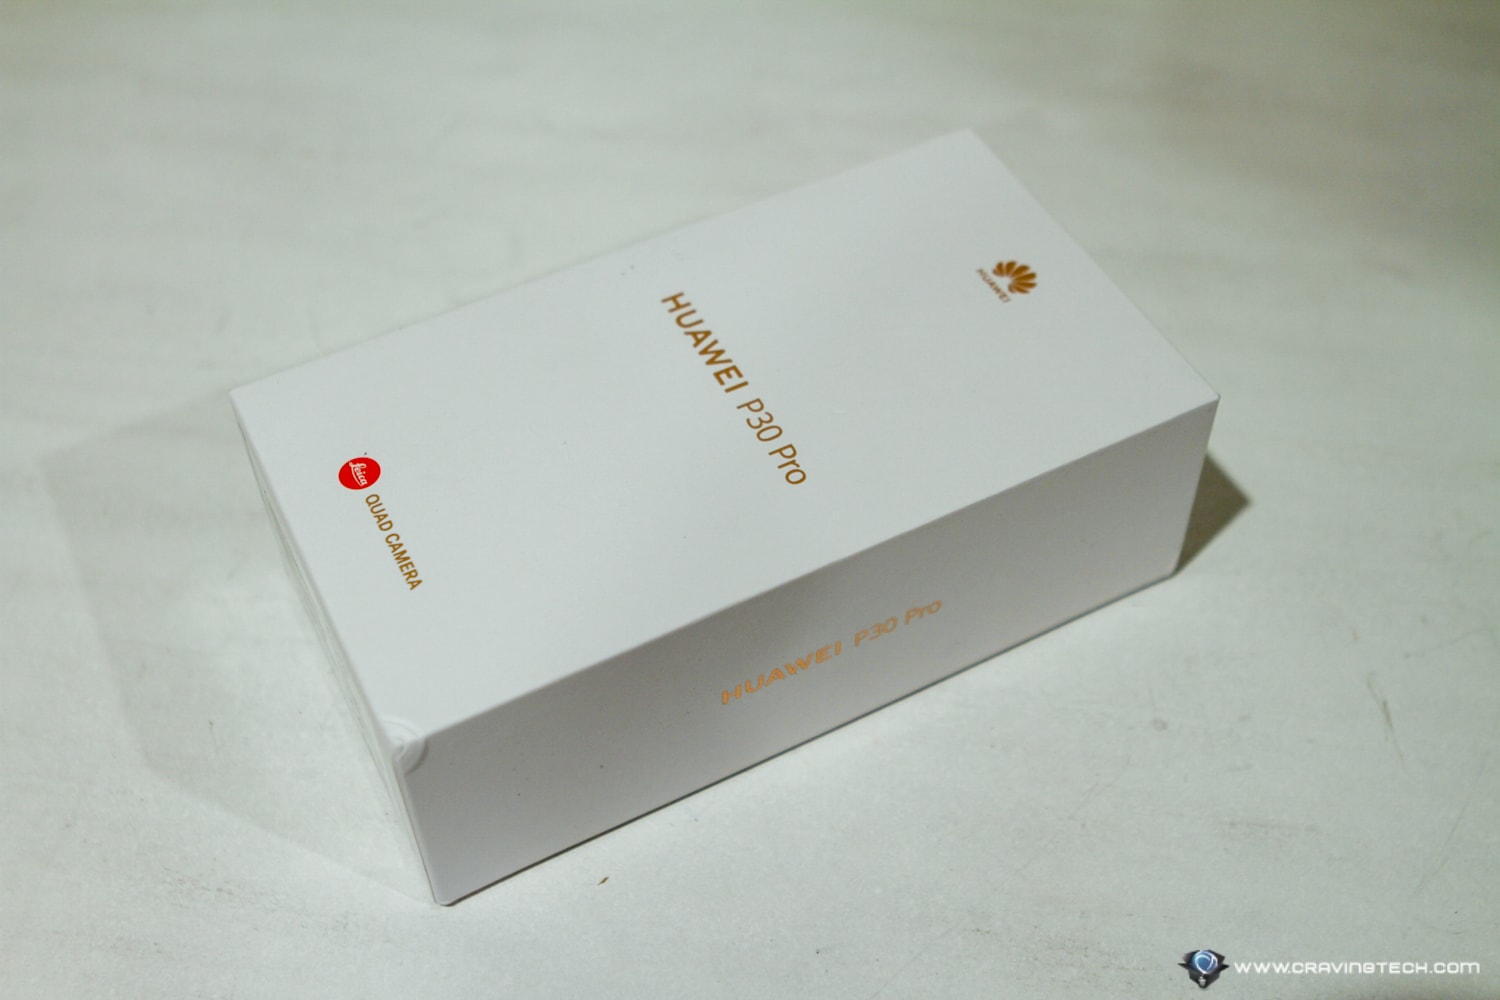 Huawei P30 Pro Review - Packaging